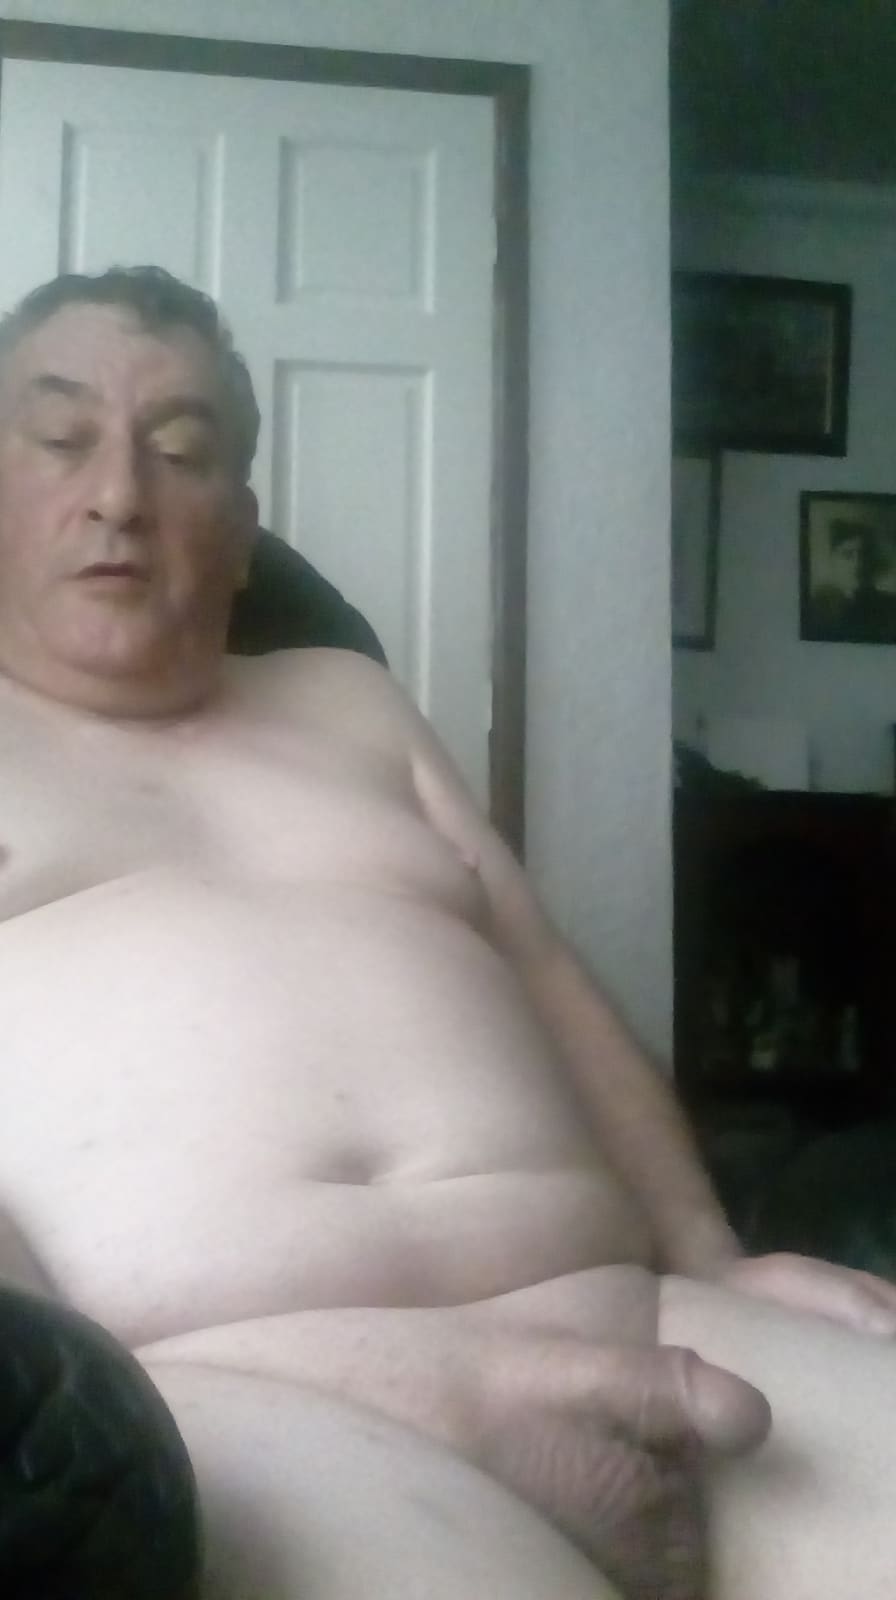 Peter nude older man flashing small cock secretly real nudity dick flash